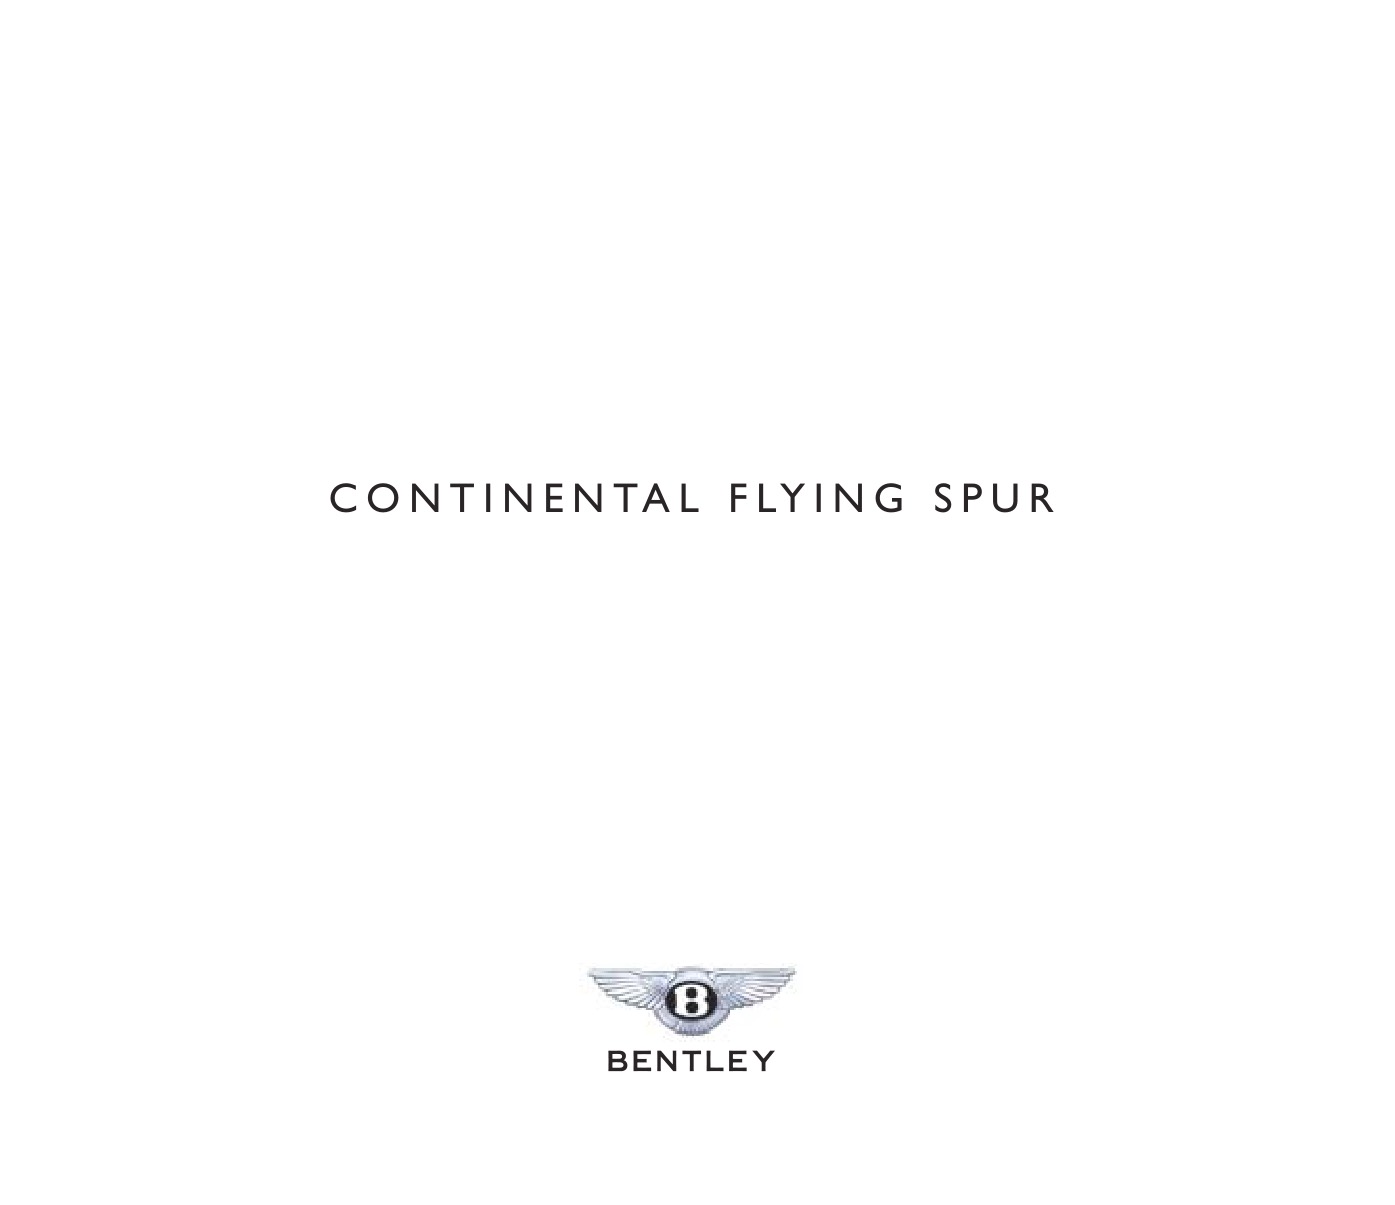 2008 Bentley Continental Flying Spur Brochure